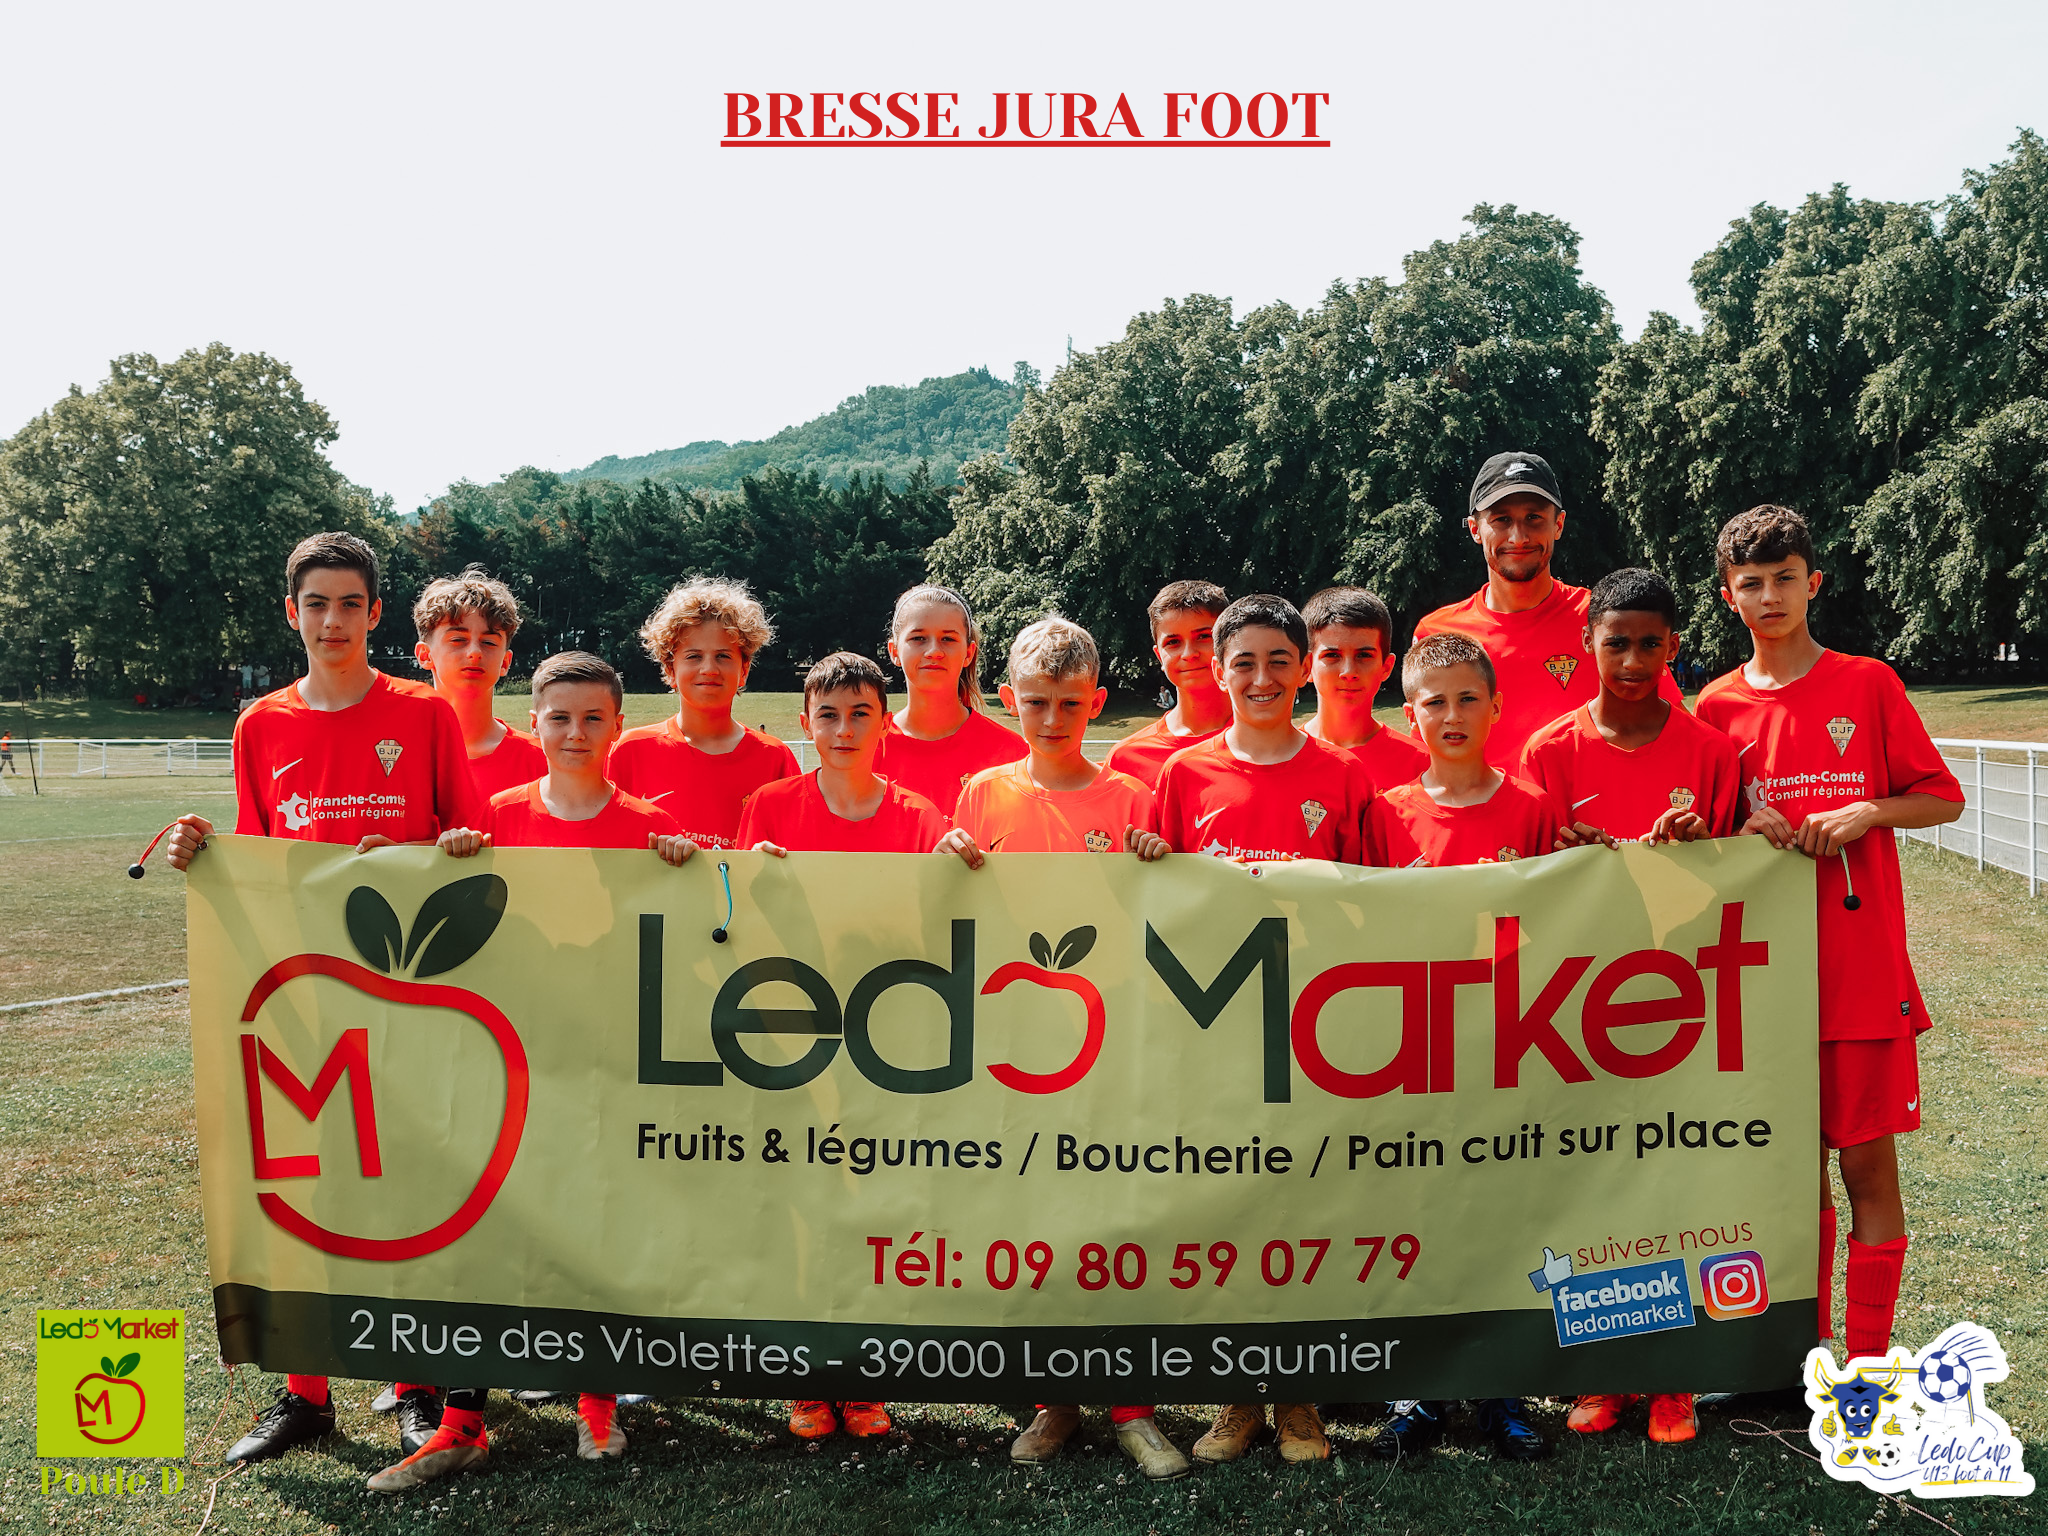 LEDOCUP Bresse Jura Foot